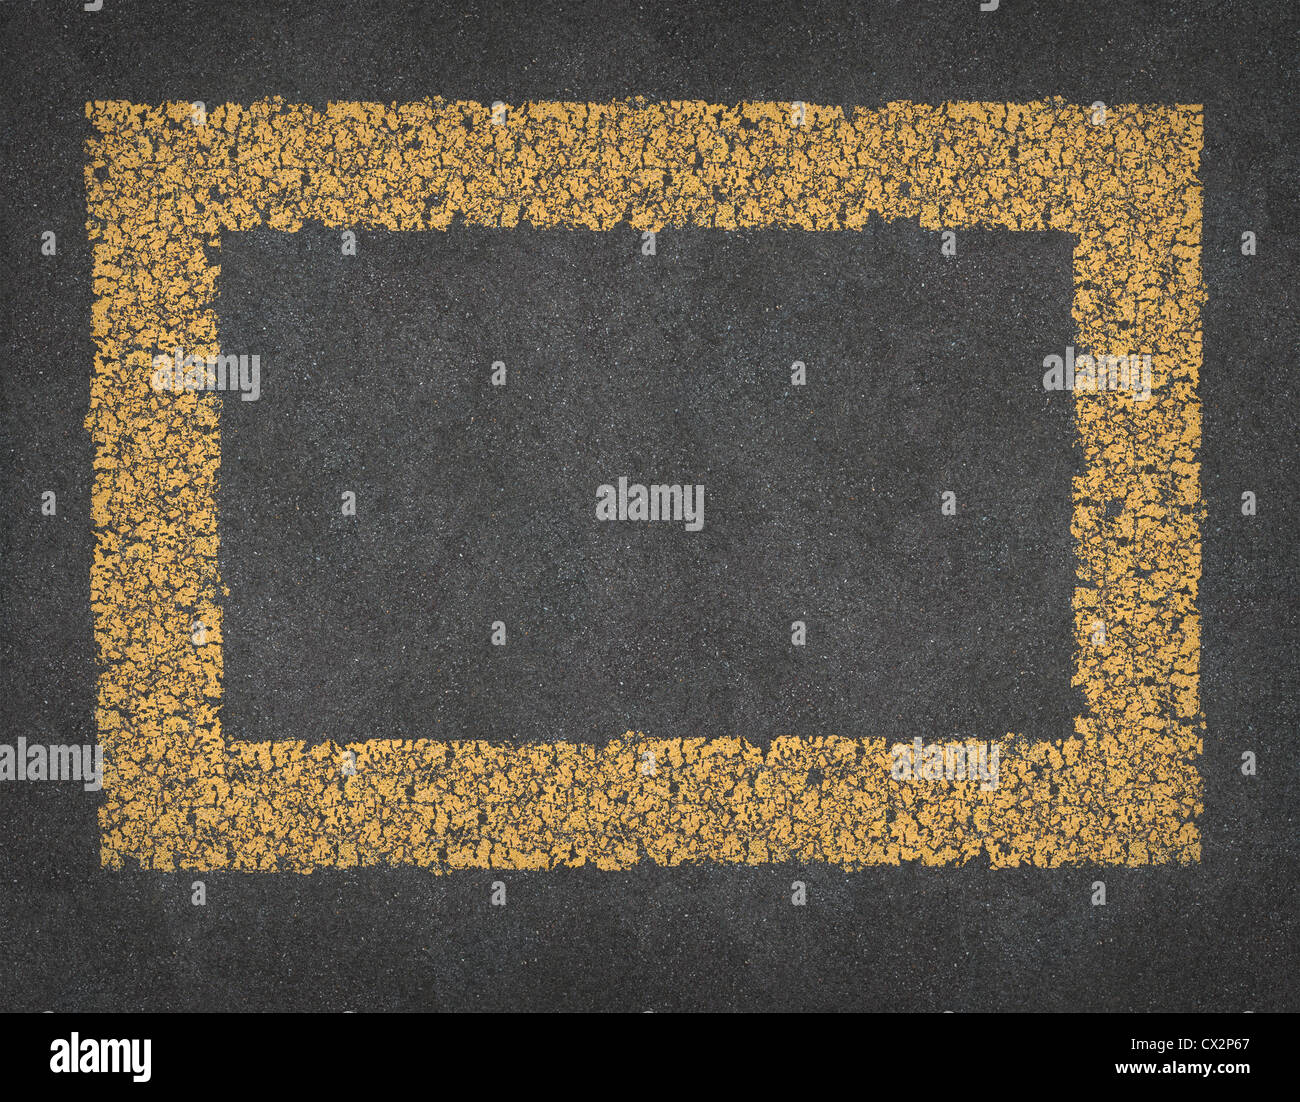 Yellow Line Road blank rectangular Frame on black asphalt as a transportation and highway traveling design element. Stock Photo